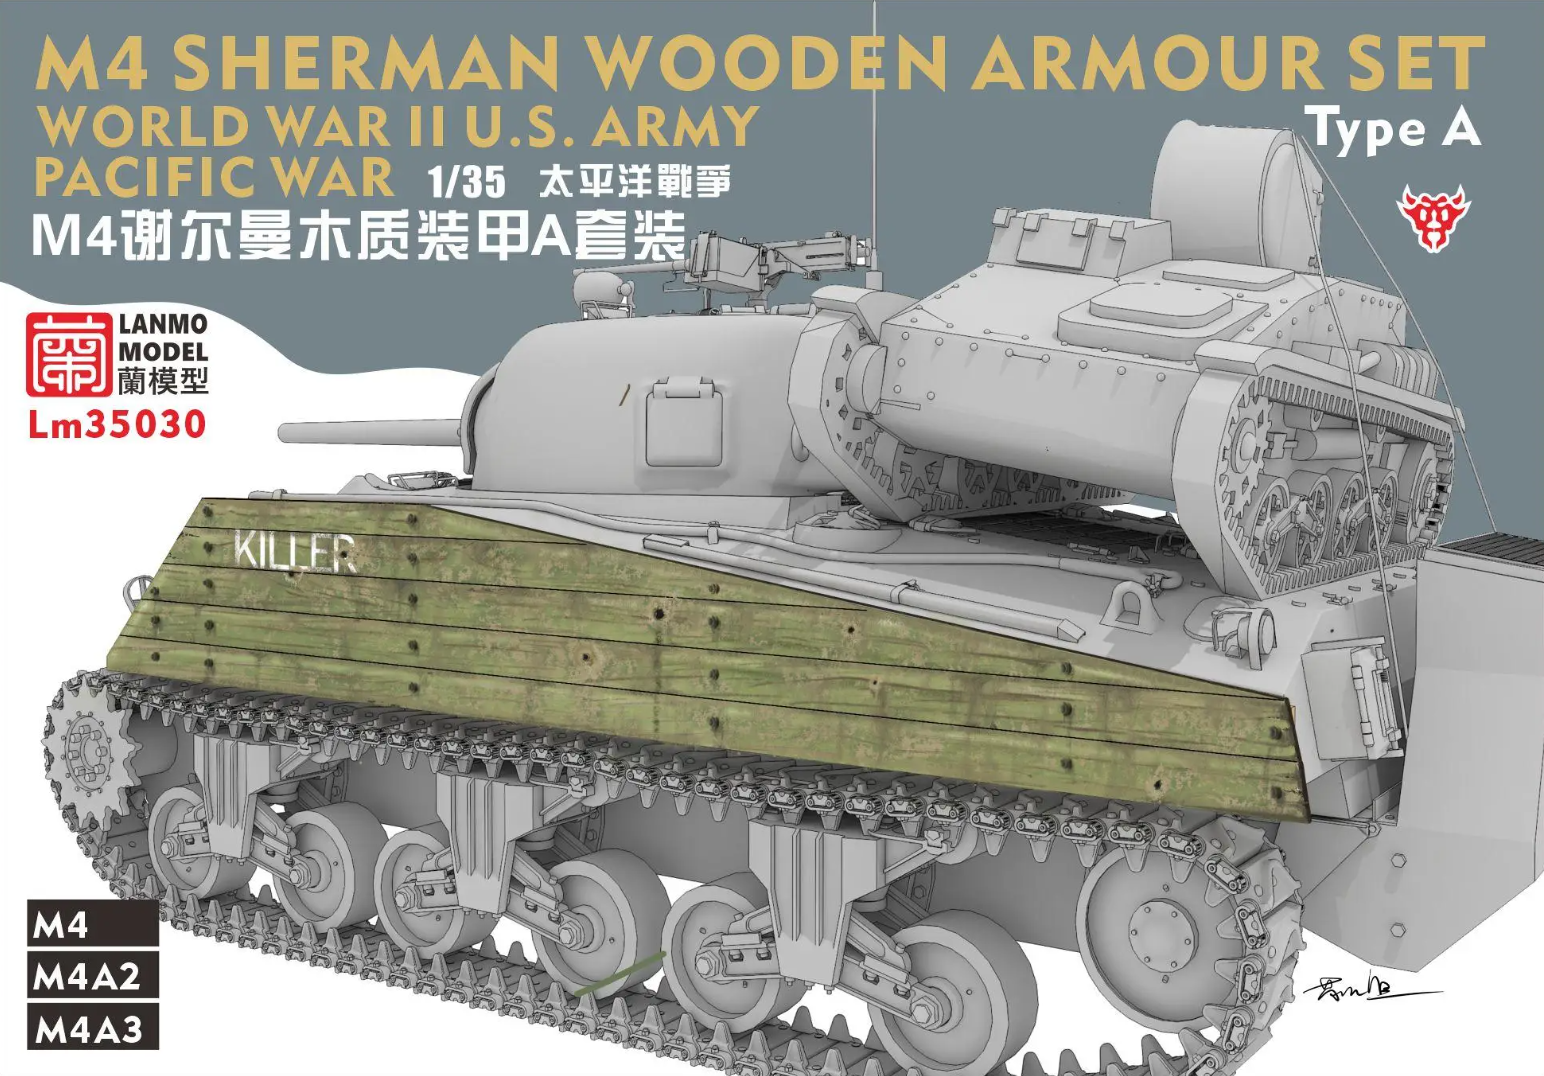 LM-35030  дополнения из дерева  M4 Sherman wooden armour Type A U.S. Army Pacific war  (1:35)